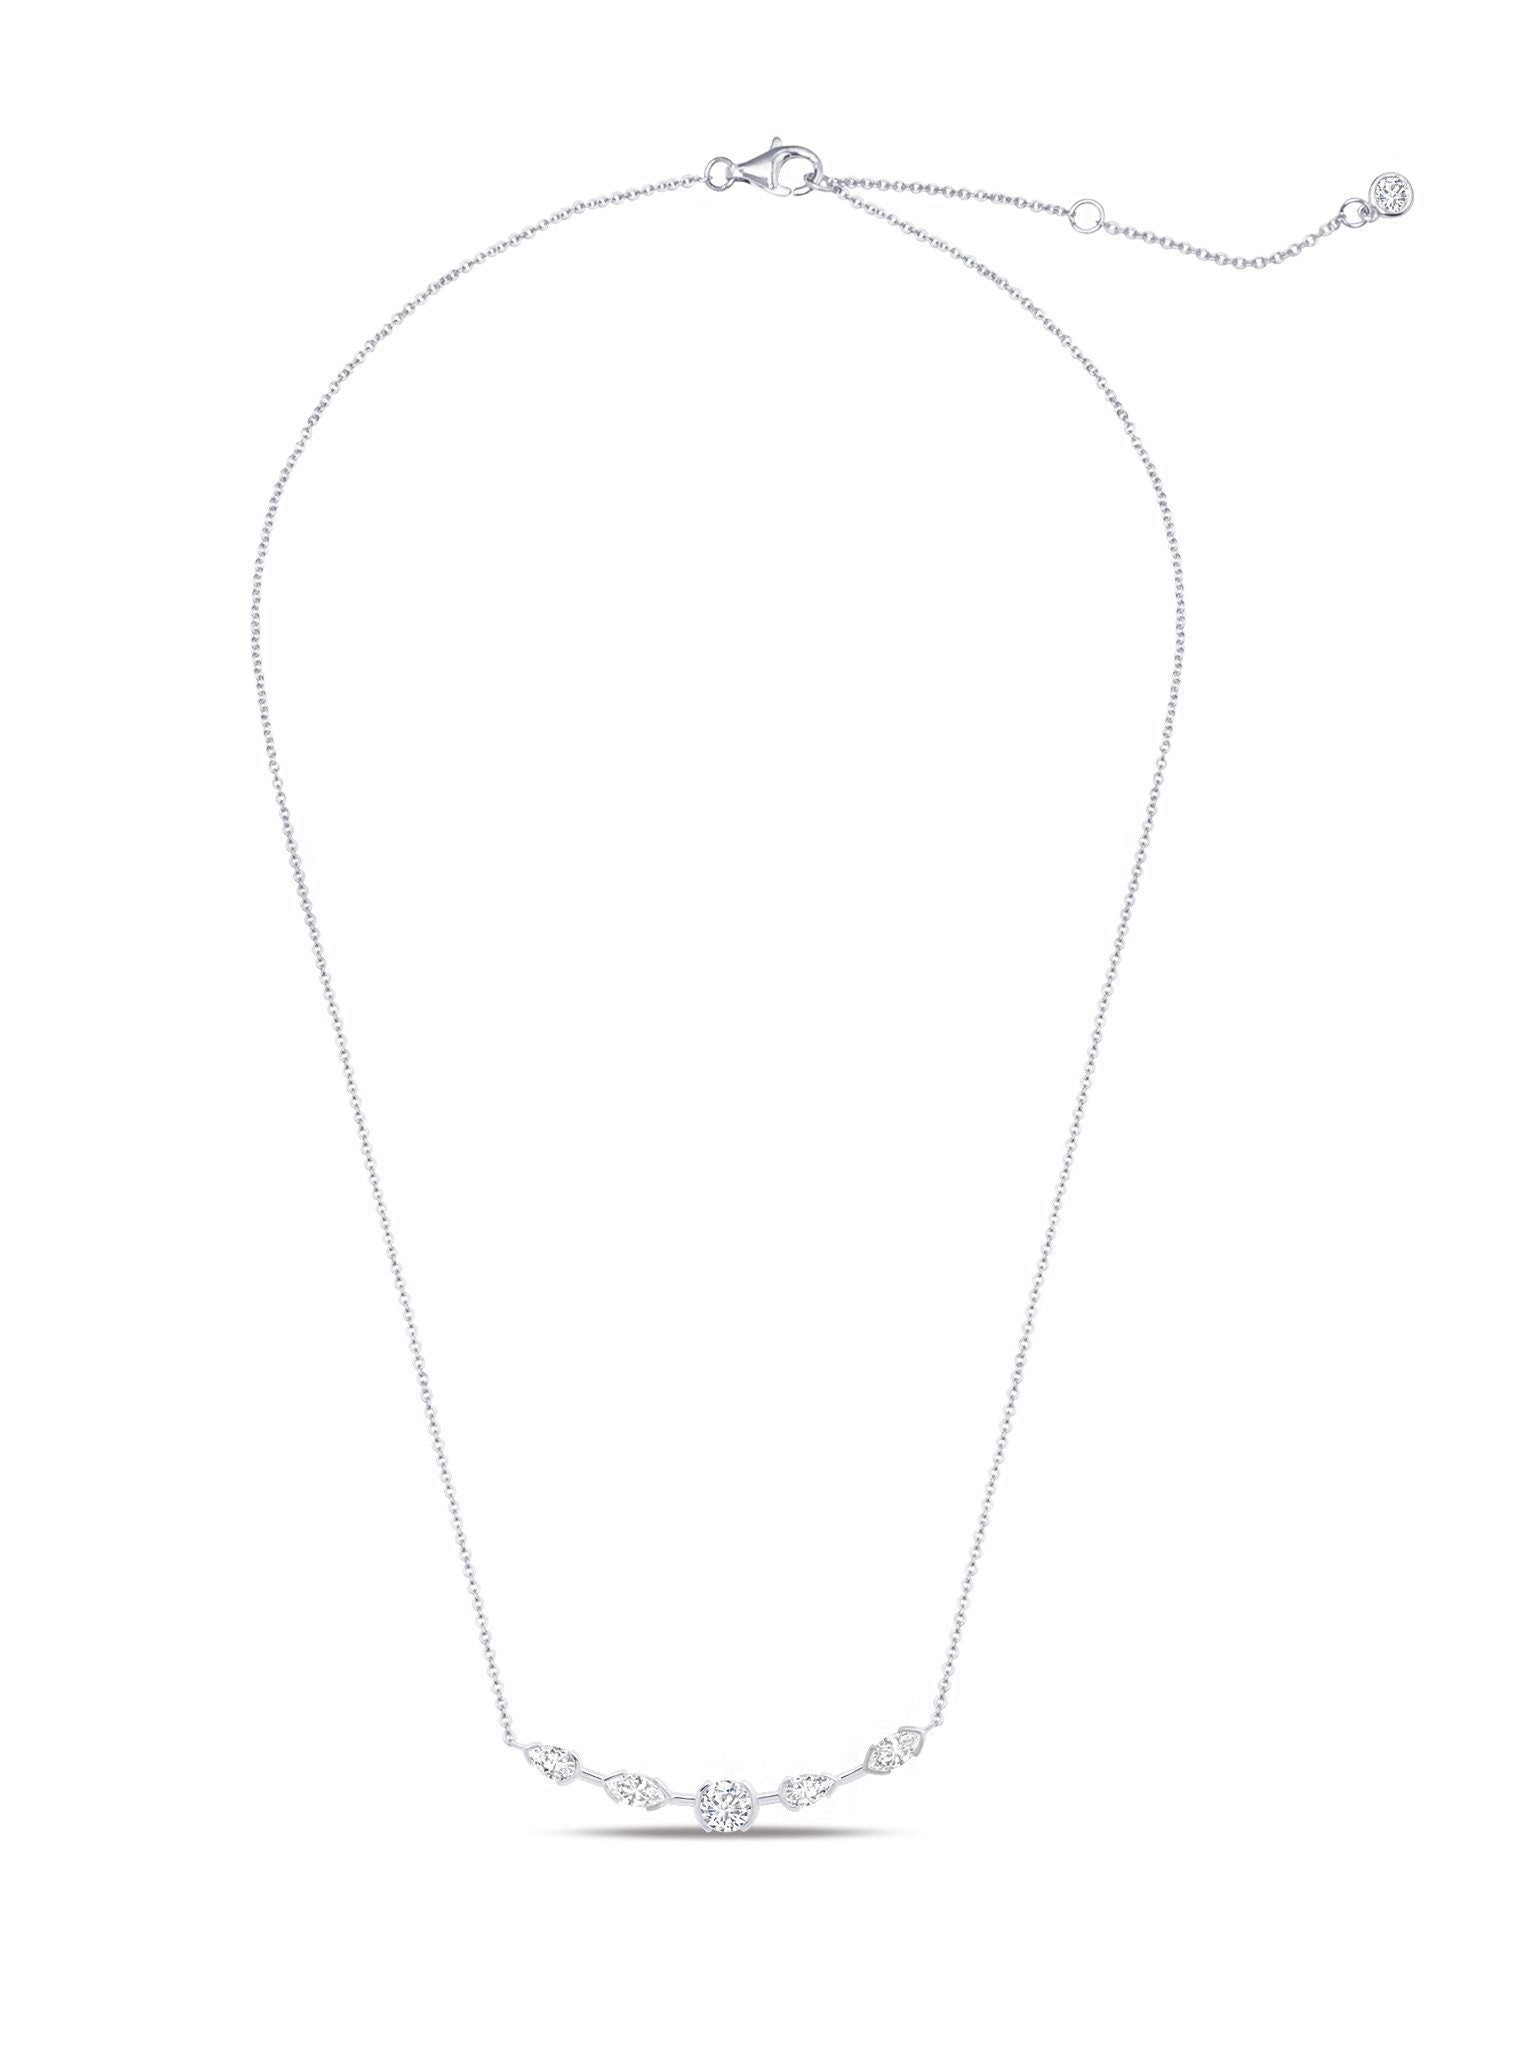 Crislu Jewelry Crislu Lavish Split Bezel CZ Necklace Finished in Pure Platinum